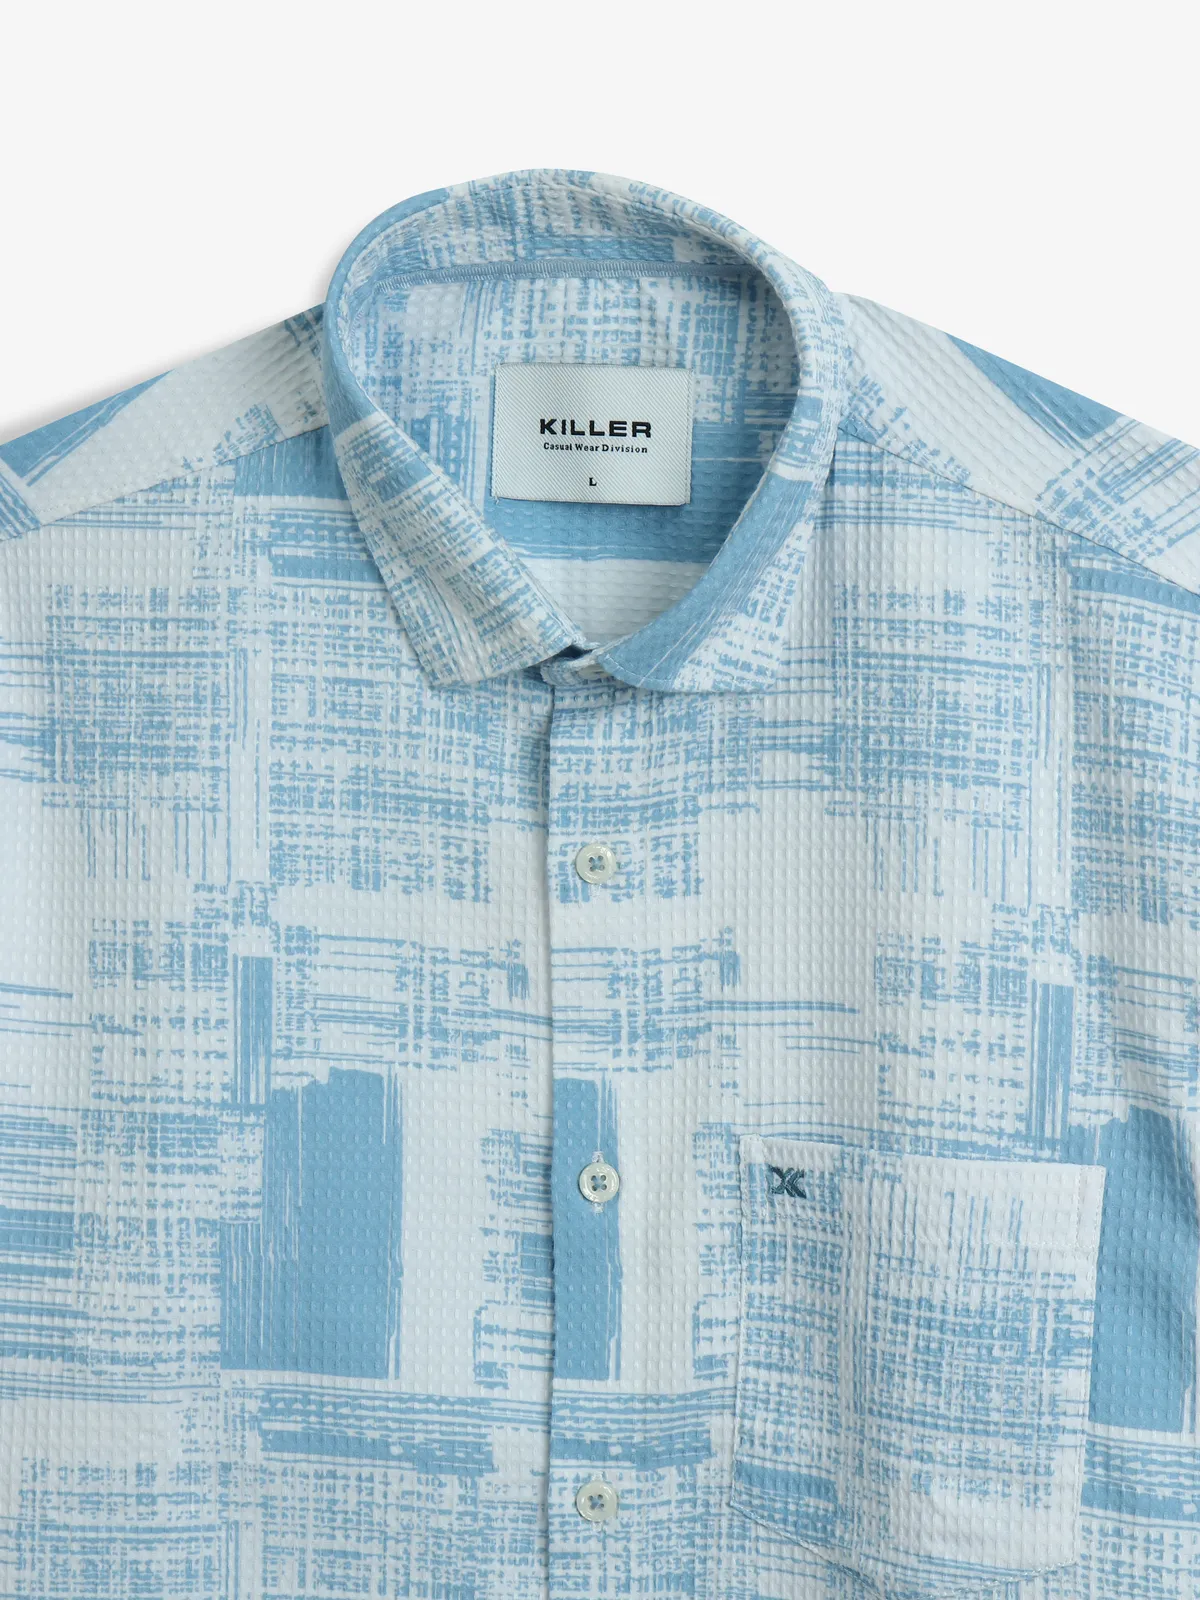 KILLER sky blue printed cotton shirt